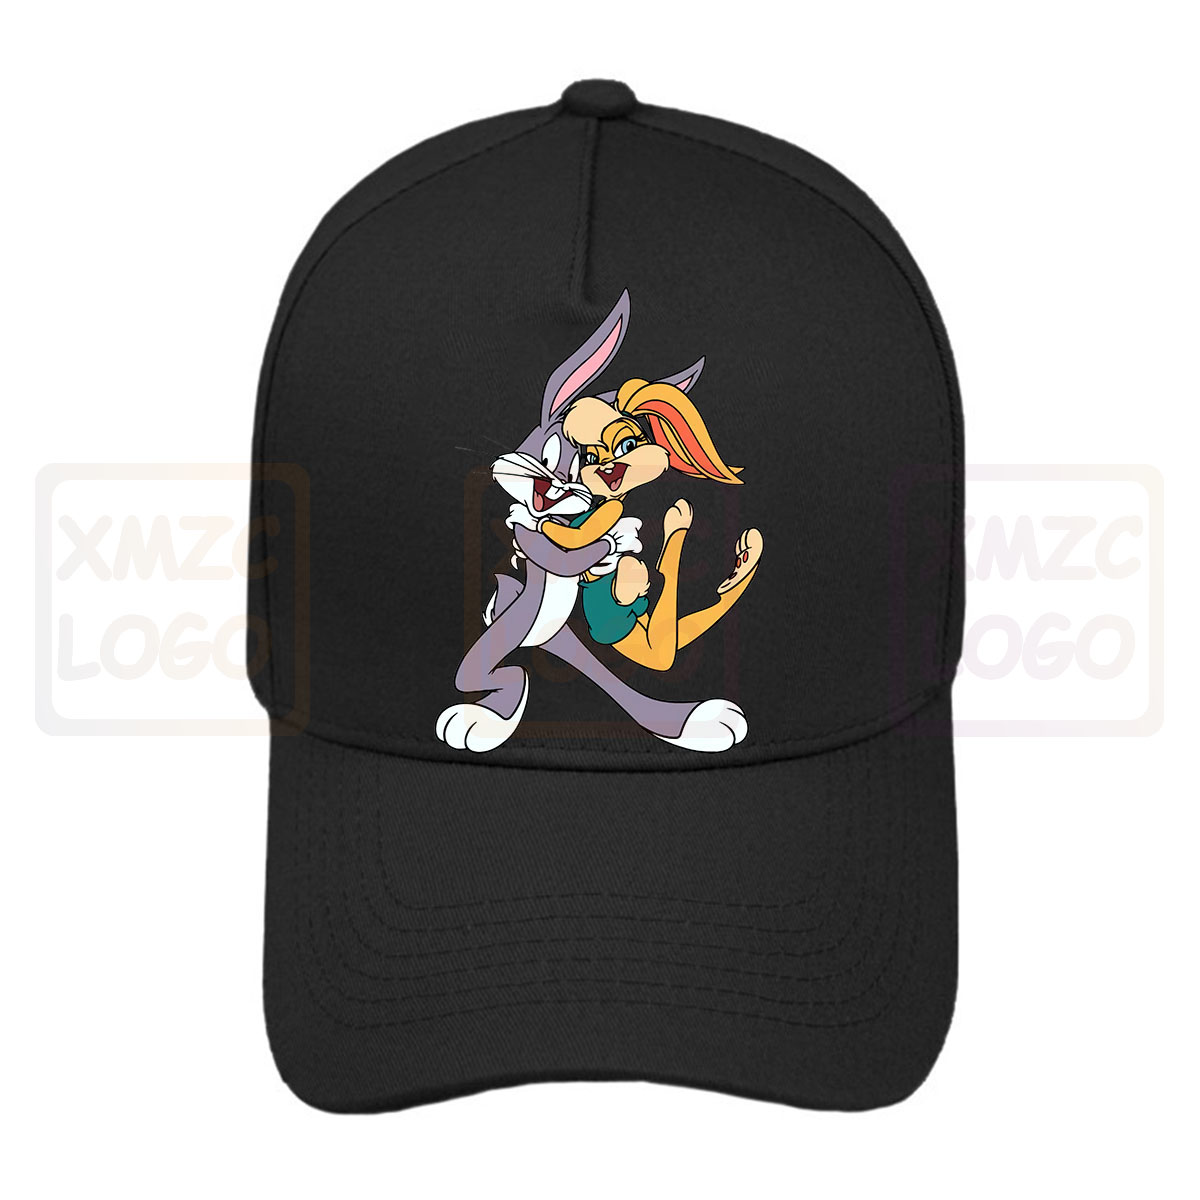 Eddie Van Ha/_Len Adjustable Baseball Cap Sports Denim Hat Outdoor Sun Visor Fashion Accessories Hat